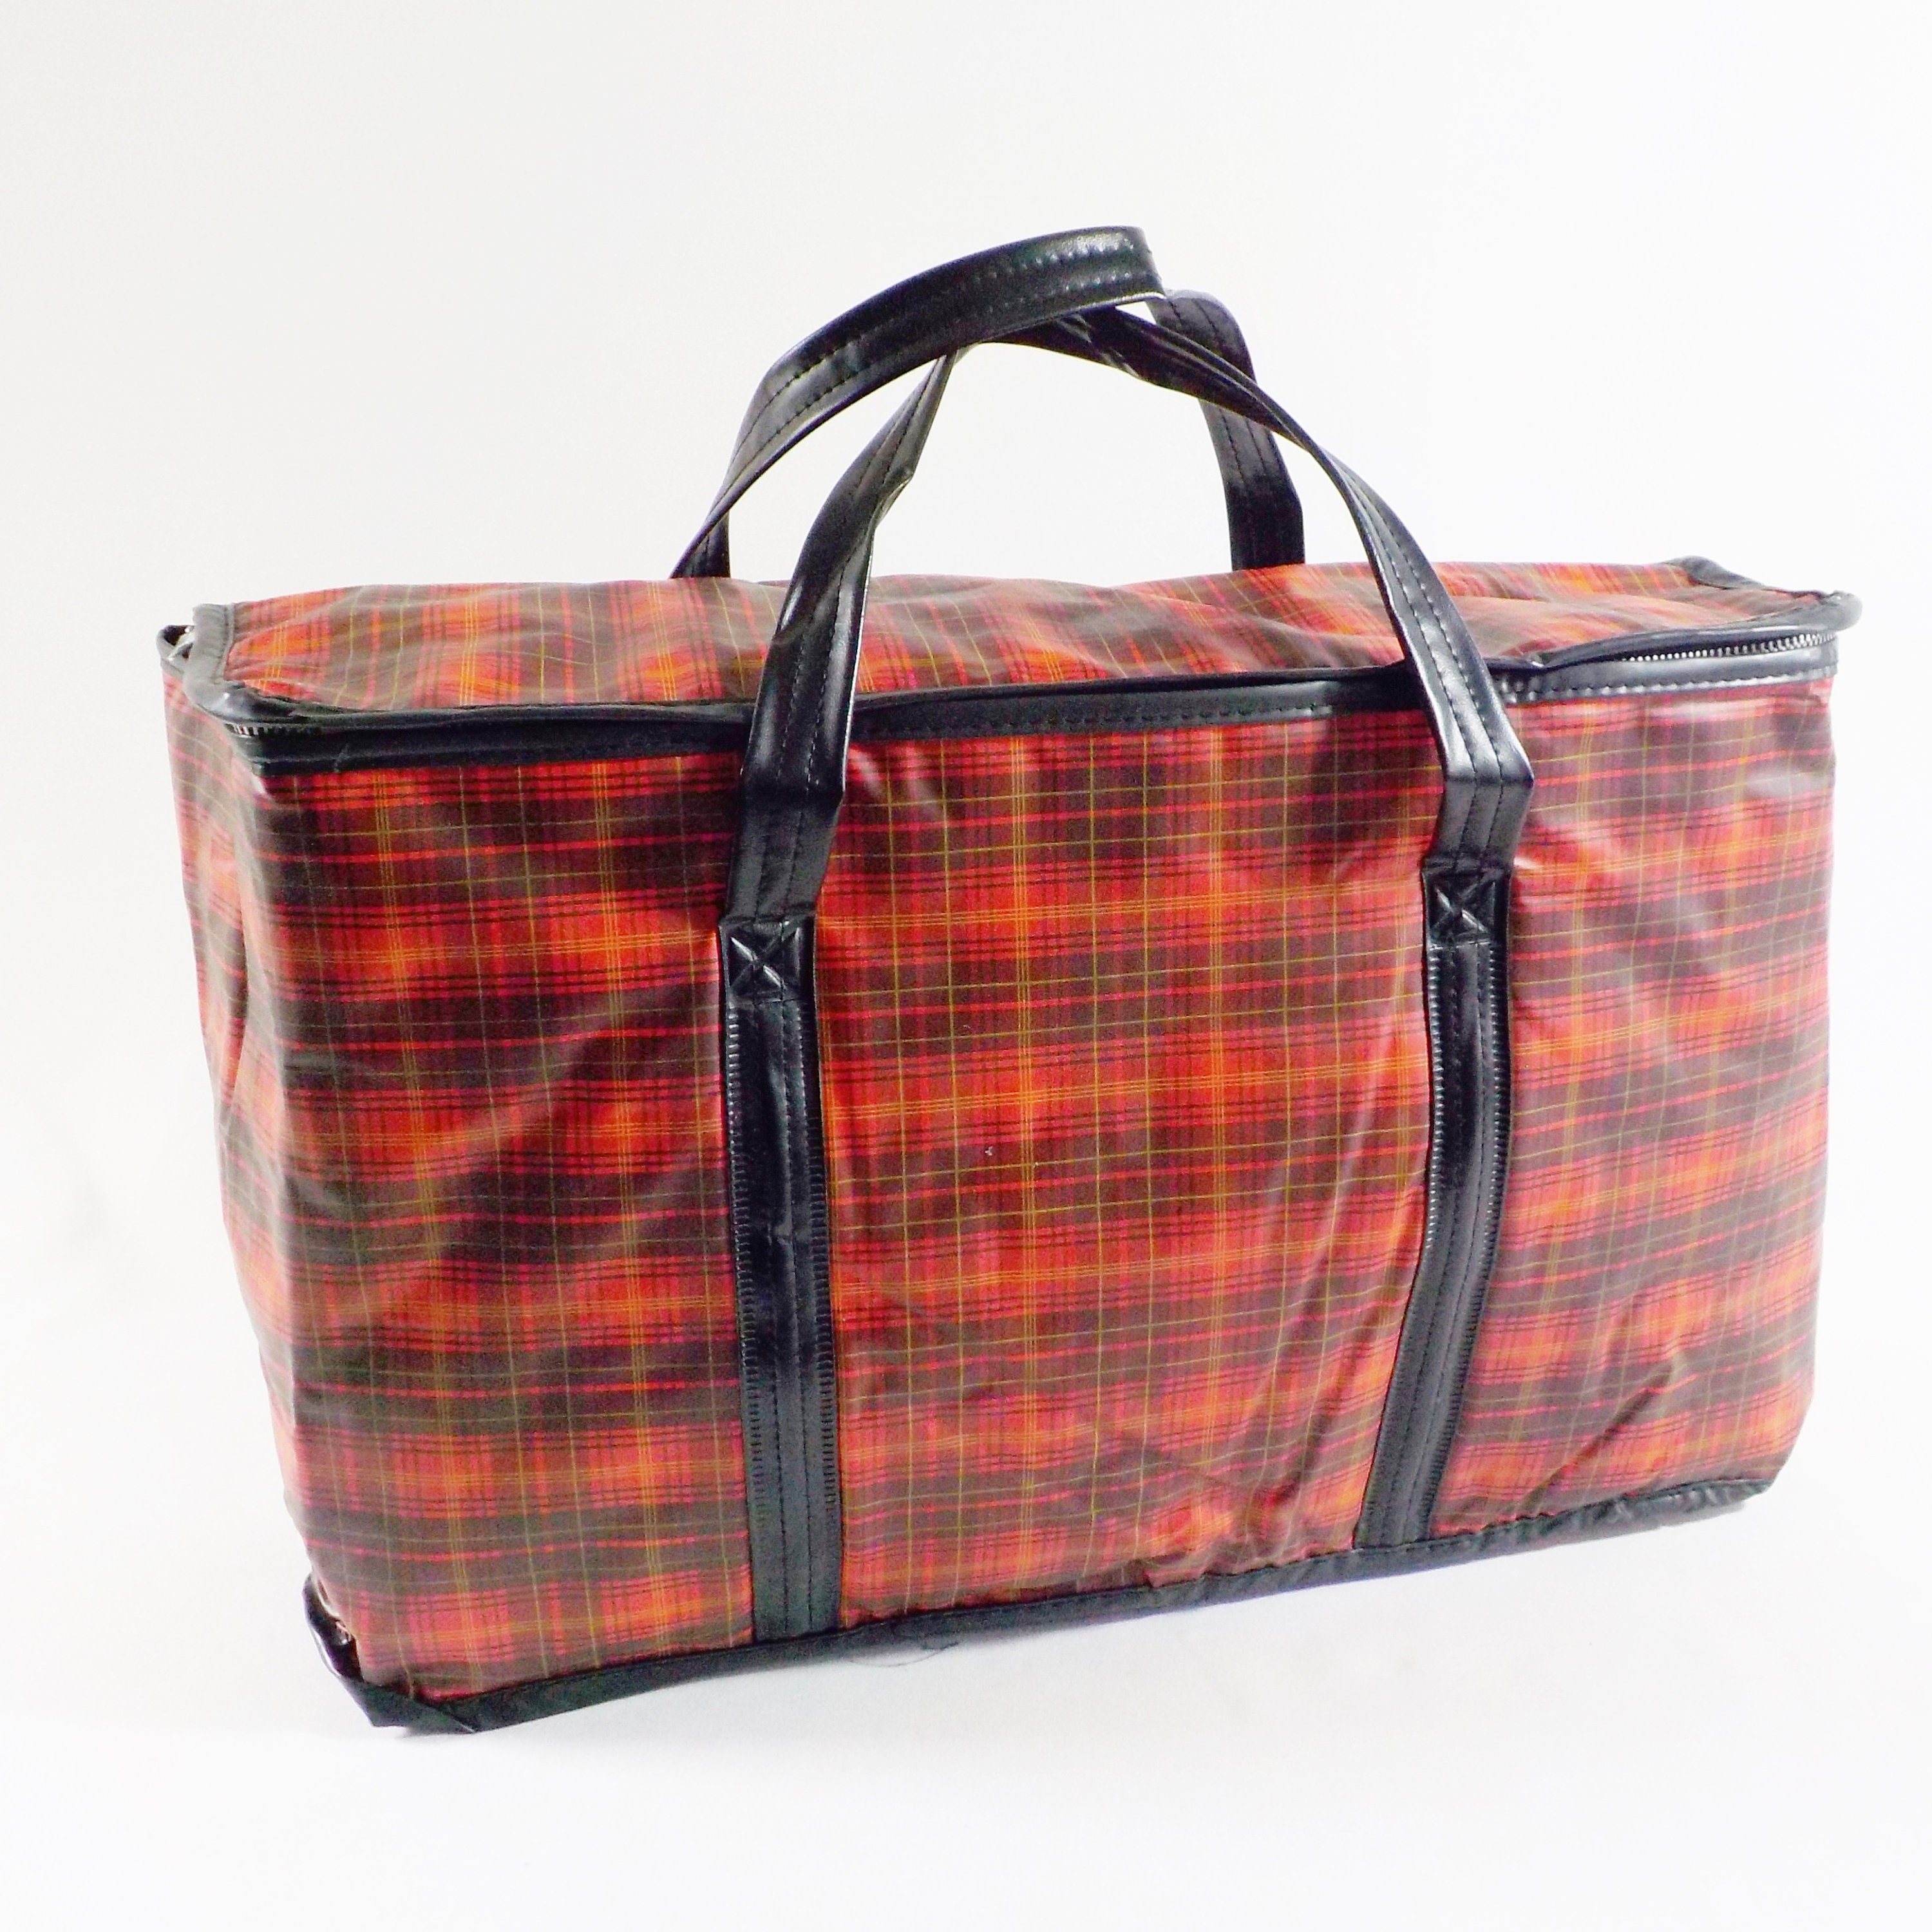 Vintage Plaid Satchel Crossbody Bag, Pu Leather Textured Bag Purse